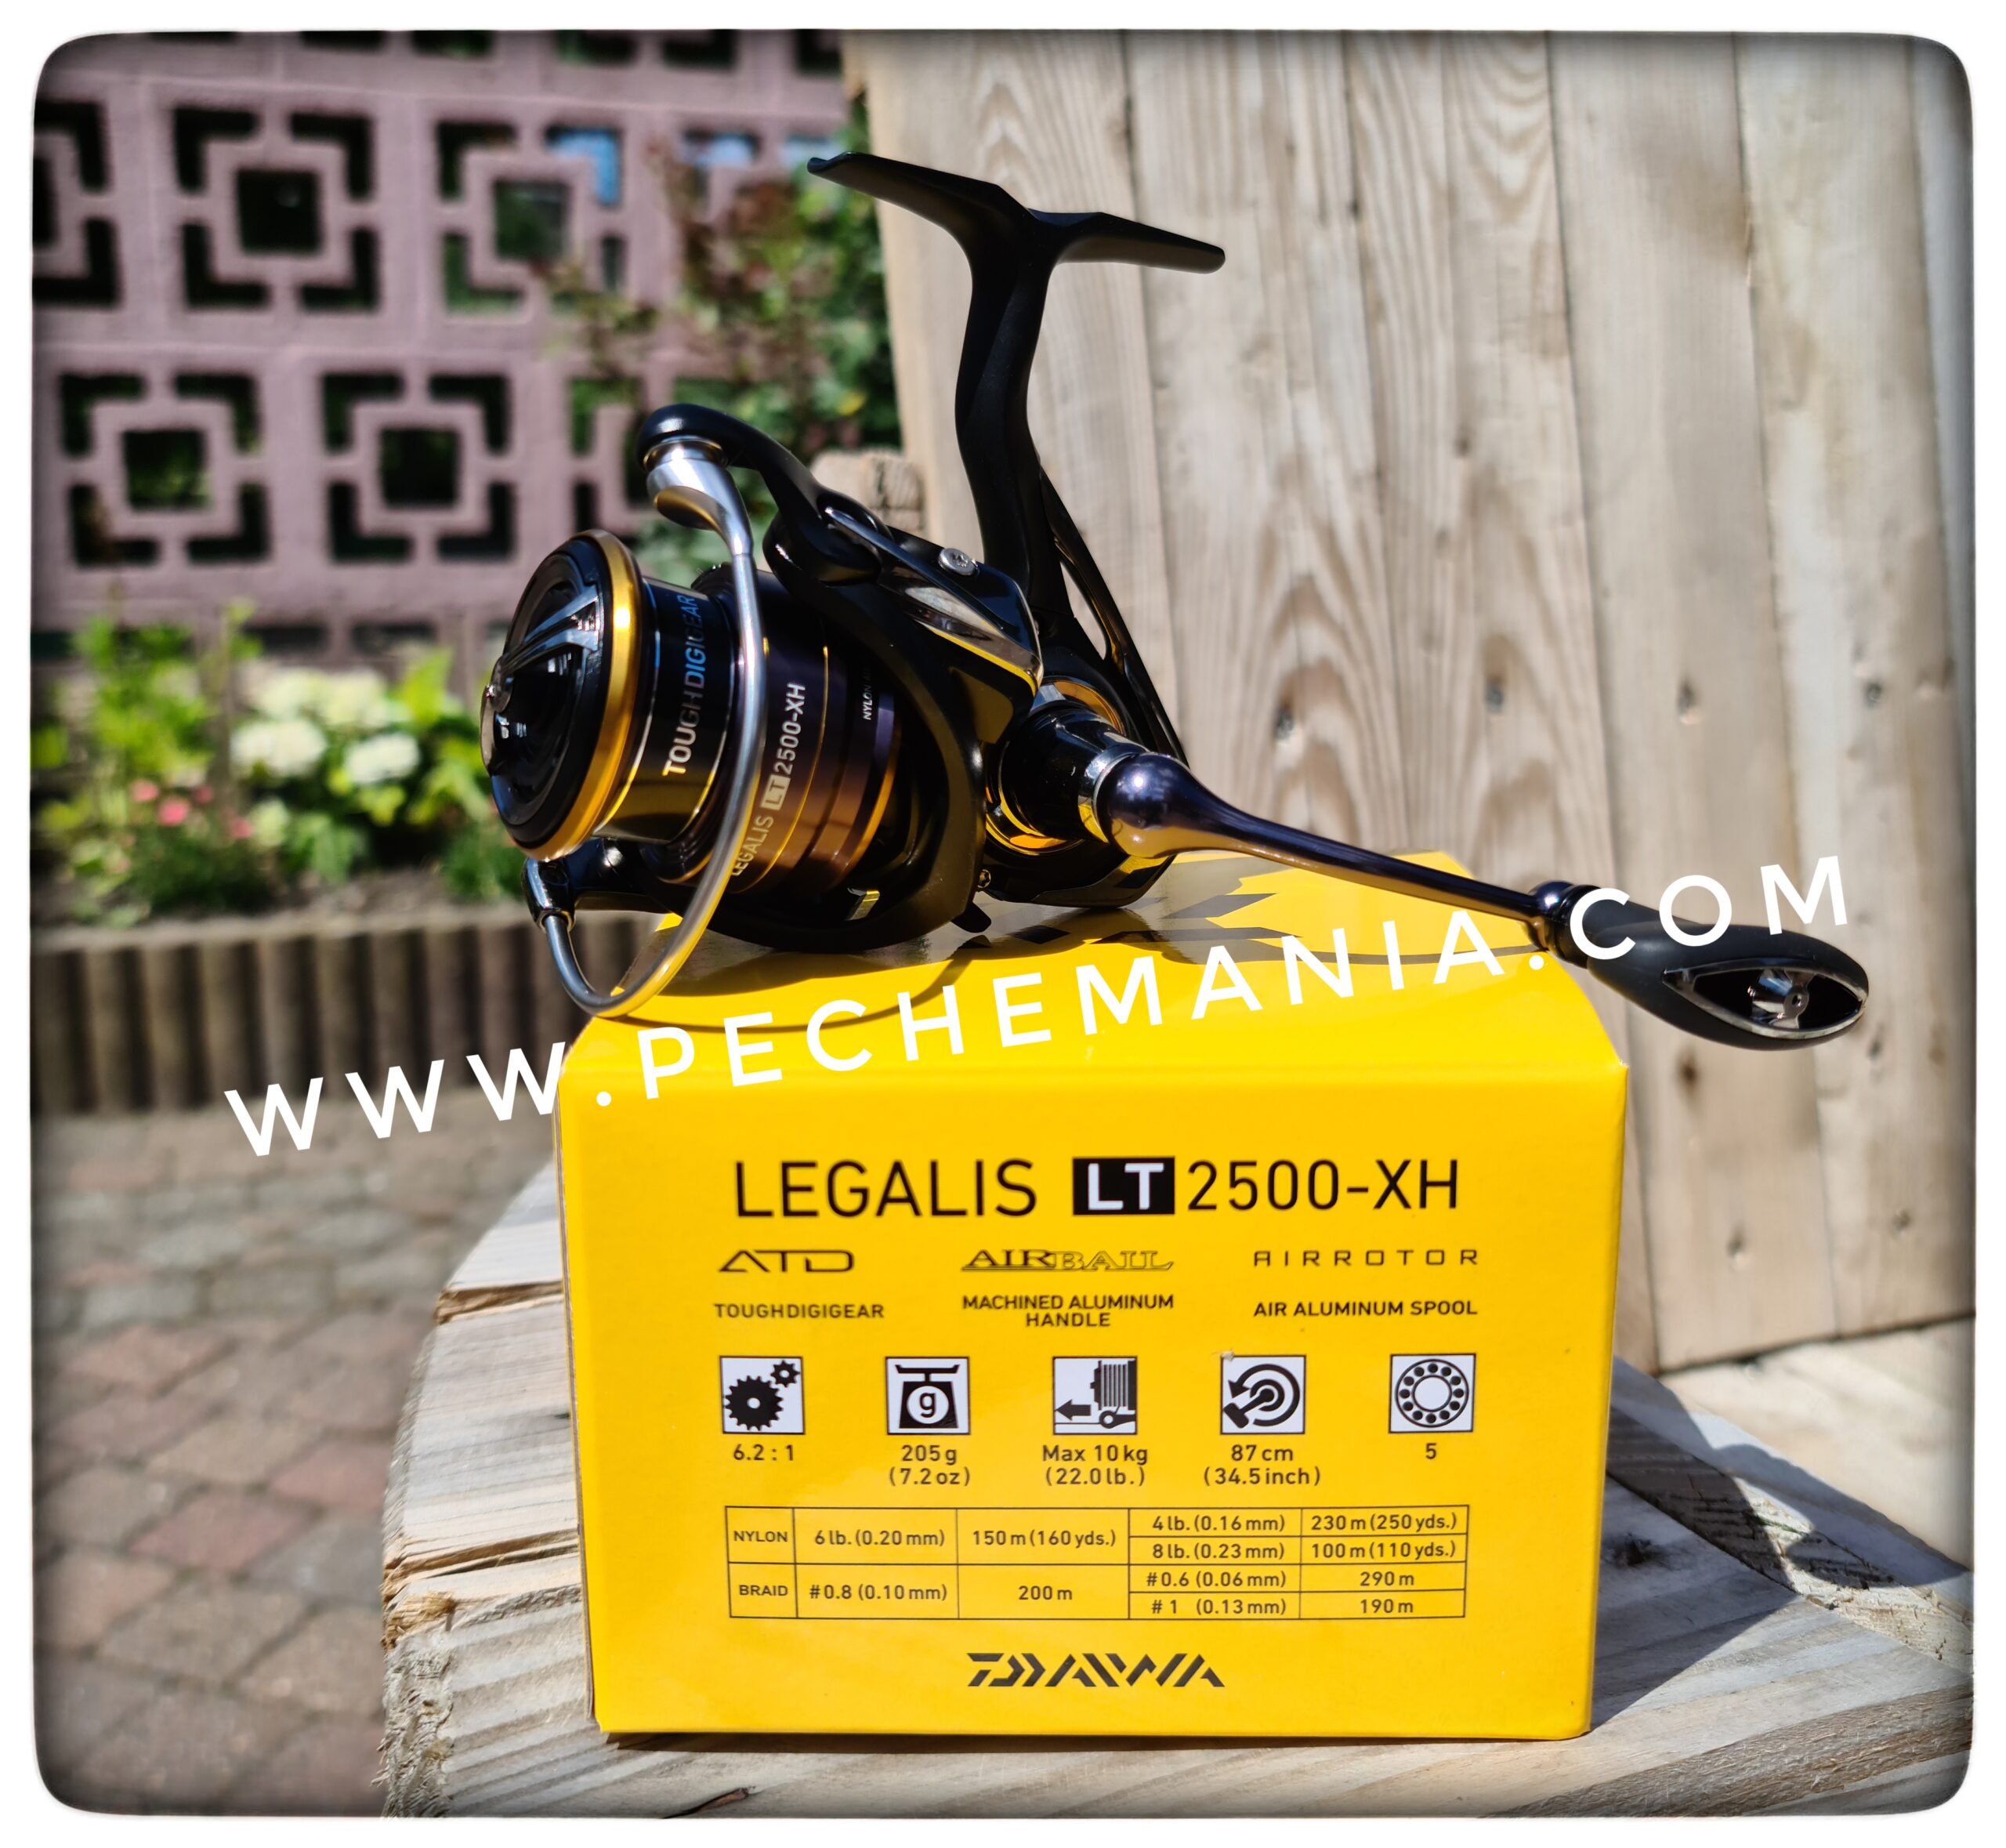 Daiwa LEGLT2500D-XH Legalis LT Spinning Reel